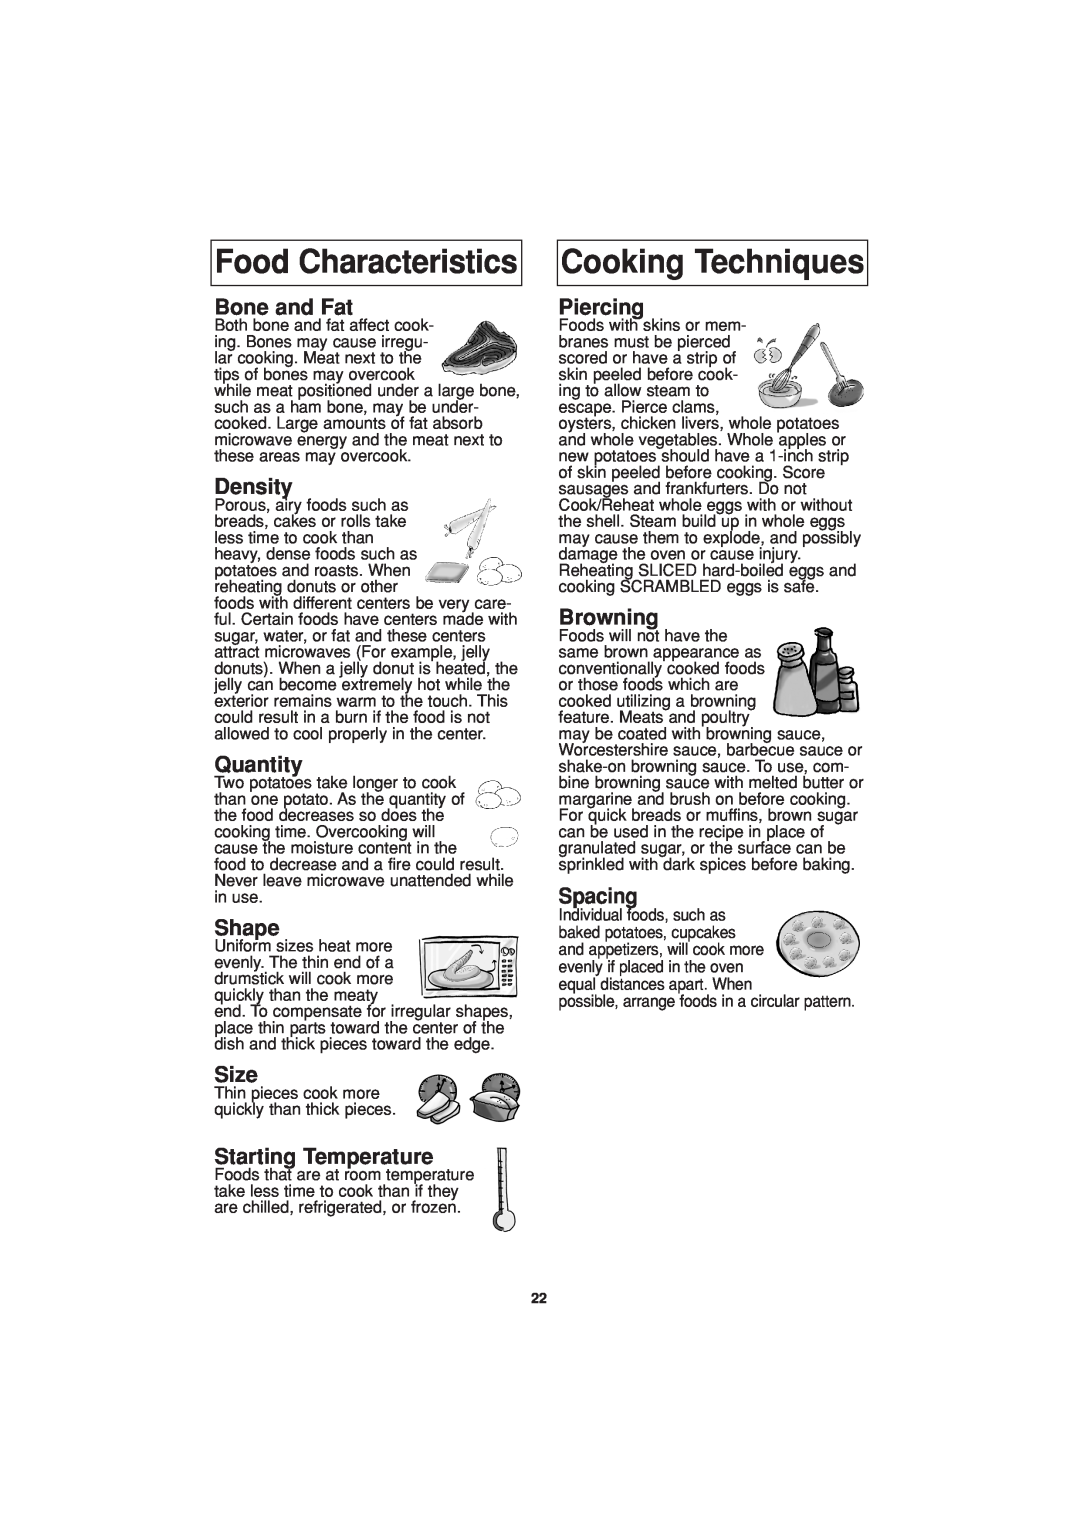 Panasonic NN-T694 Food Characteristics, Cooking Techniques, Bone and Fat, Density, Quantity, Shape, Size, Piercing 